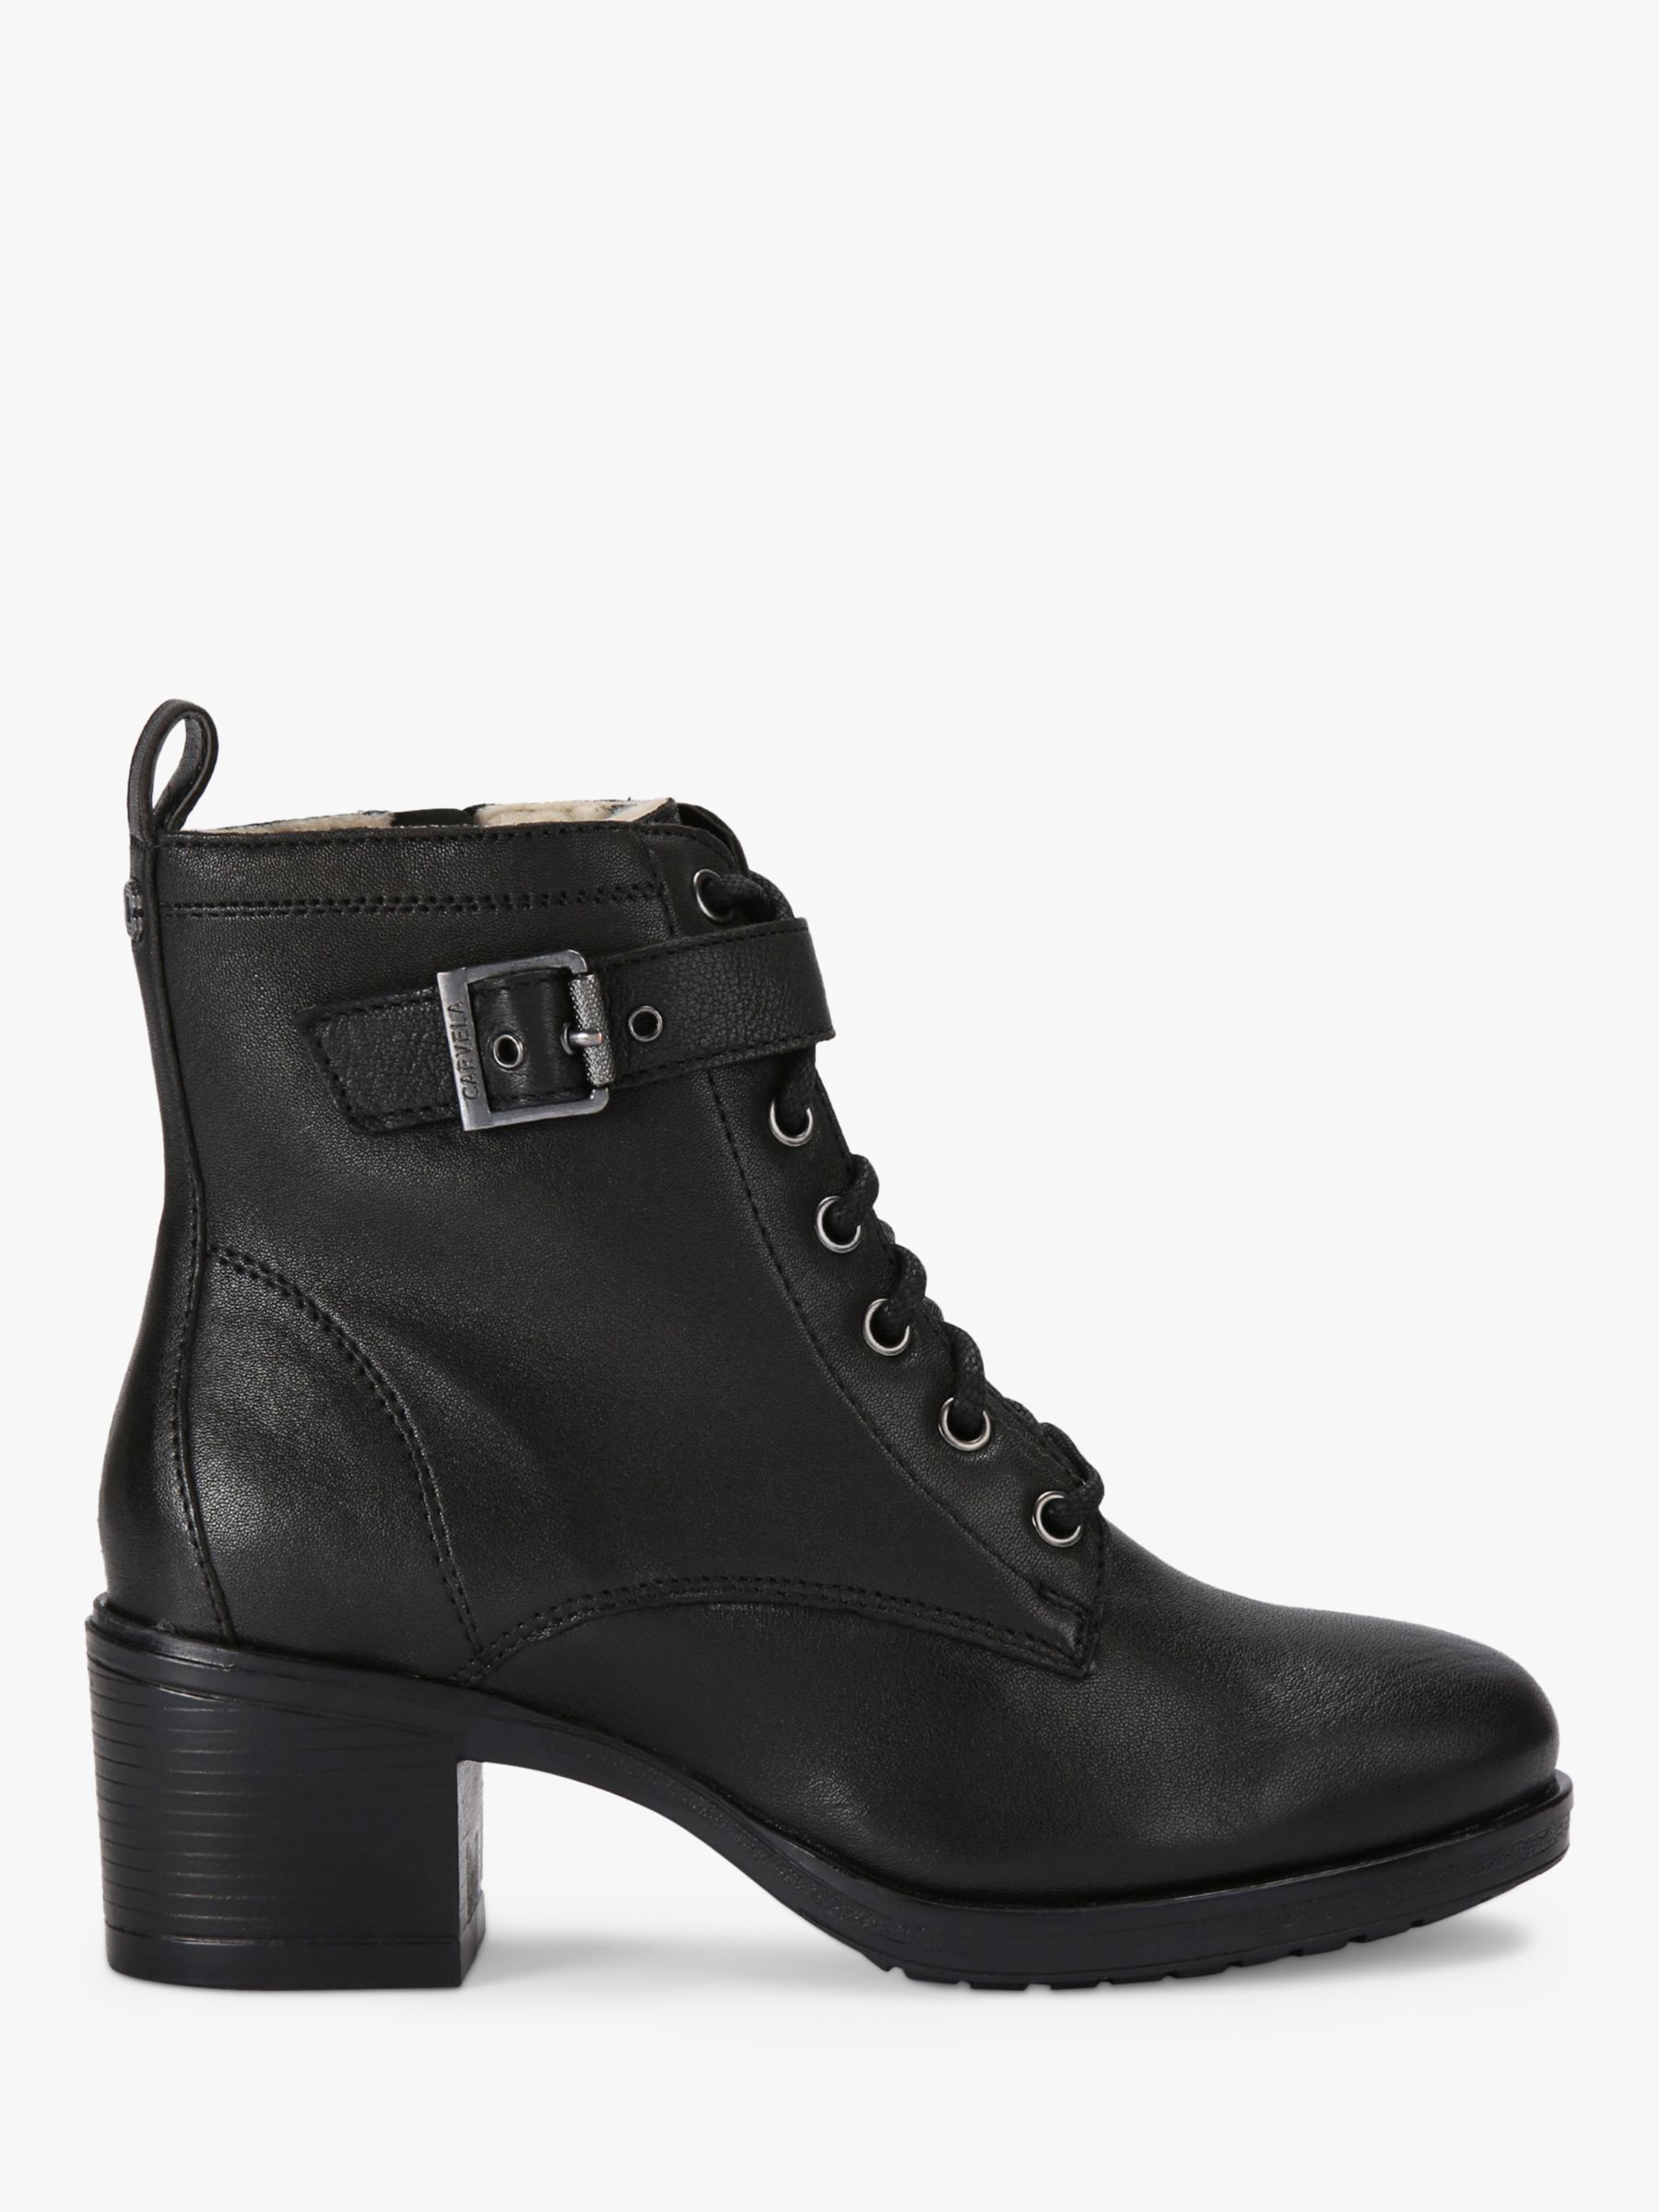 Carvela Snug Leather Lace Up Ankle Boots, Black at John Lewis & Partners